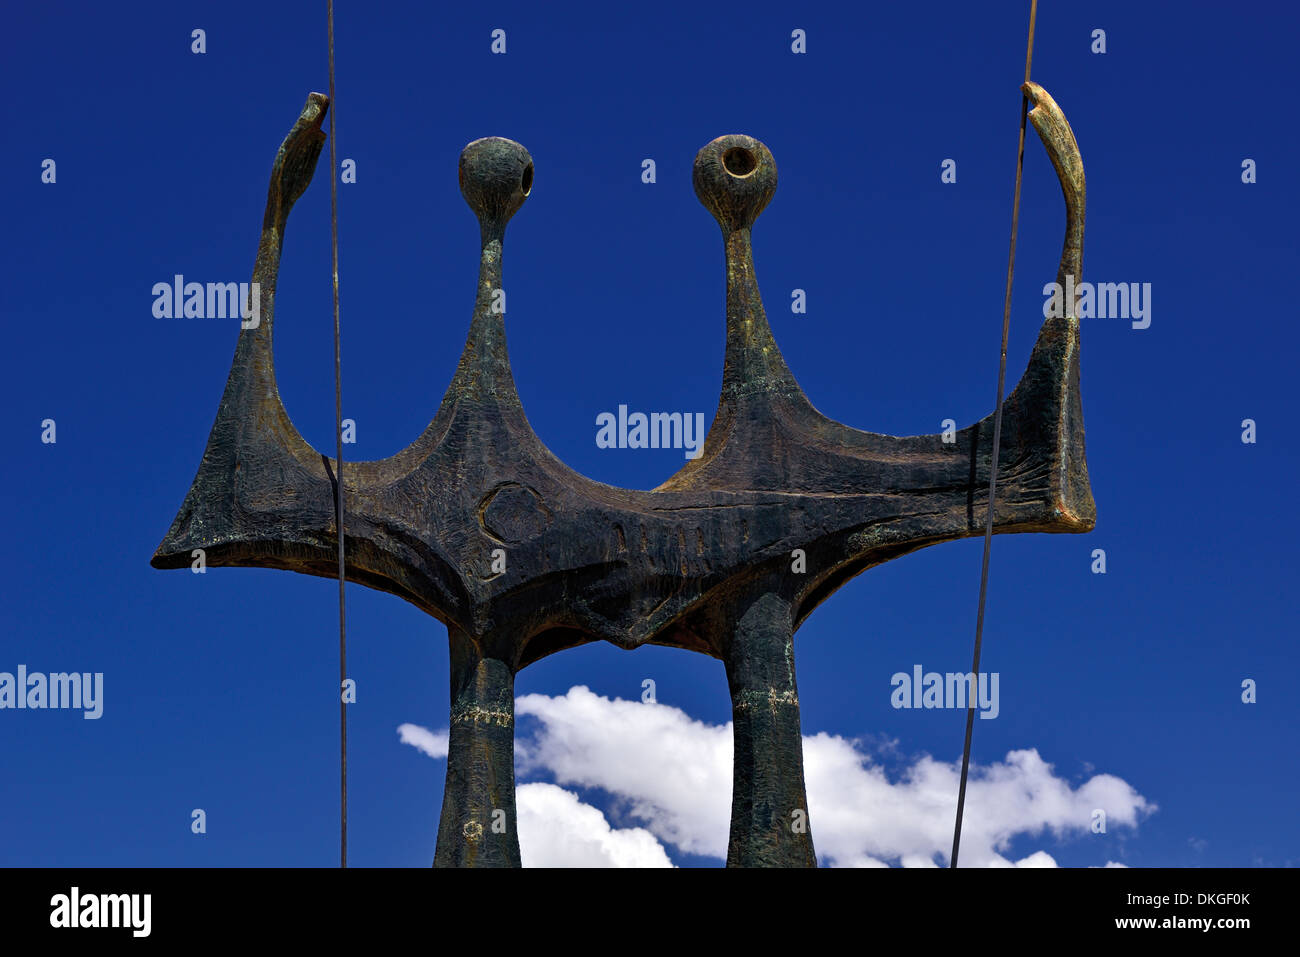 Brazil, Brasilia: Monument 'Os Candangos' by Bruno Giorgi at Praca dos Tres Poderes Stock Photo